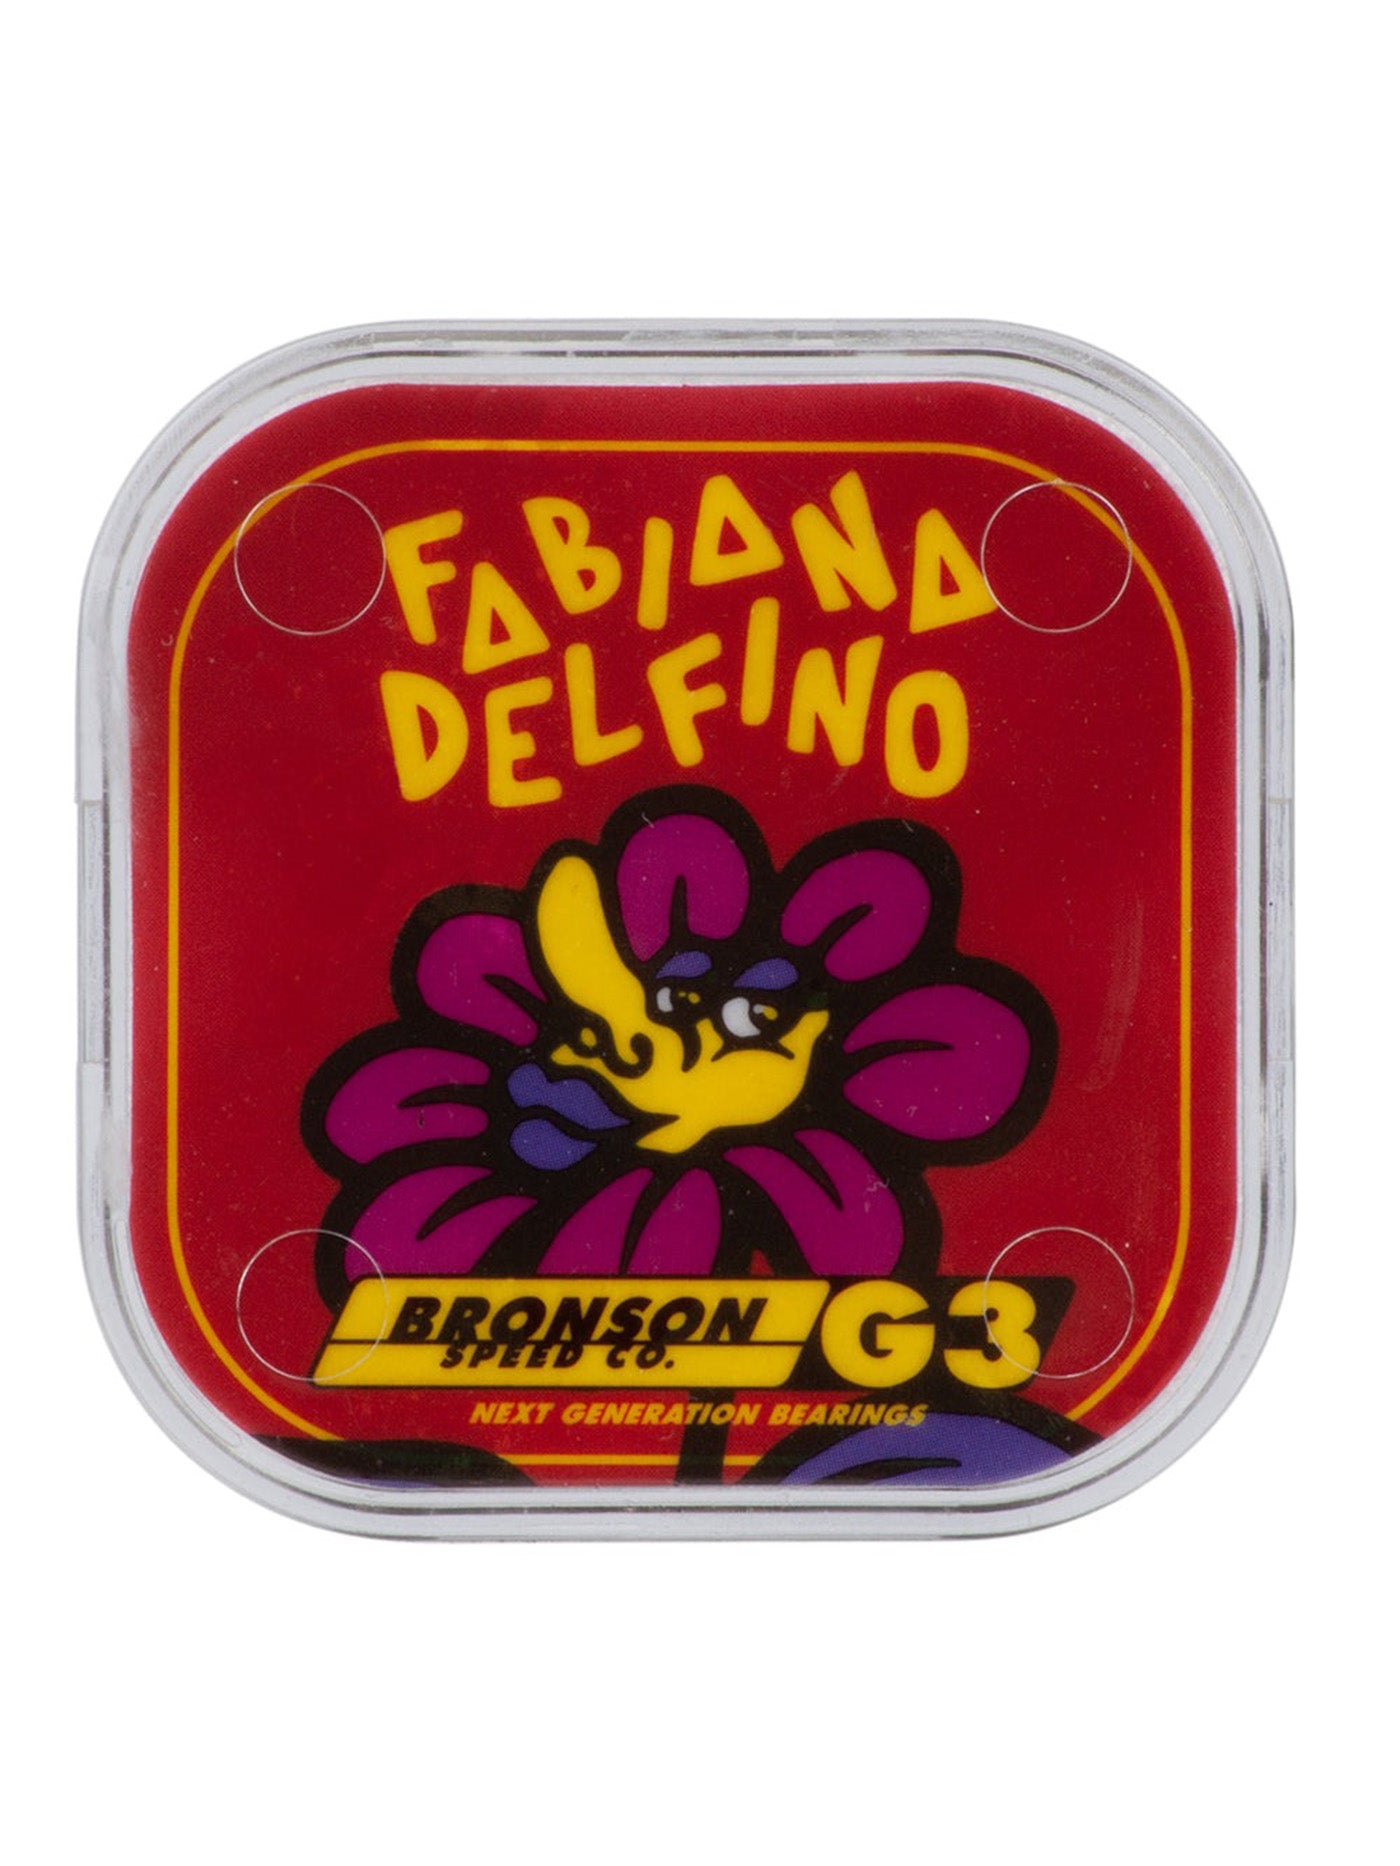 Bronson G3 Fabiana Delfino Bearings